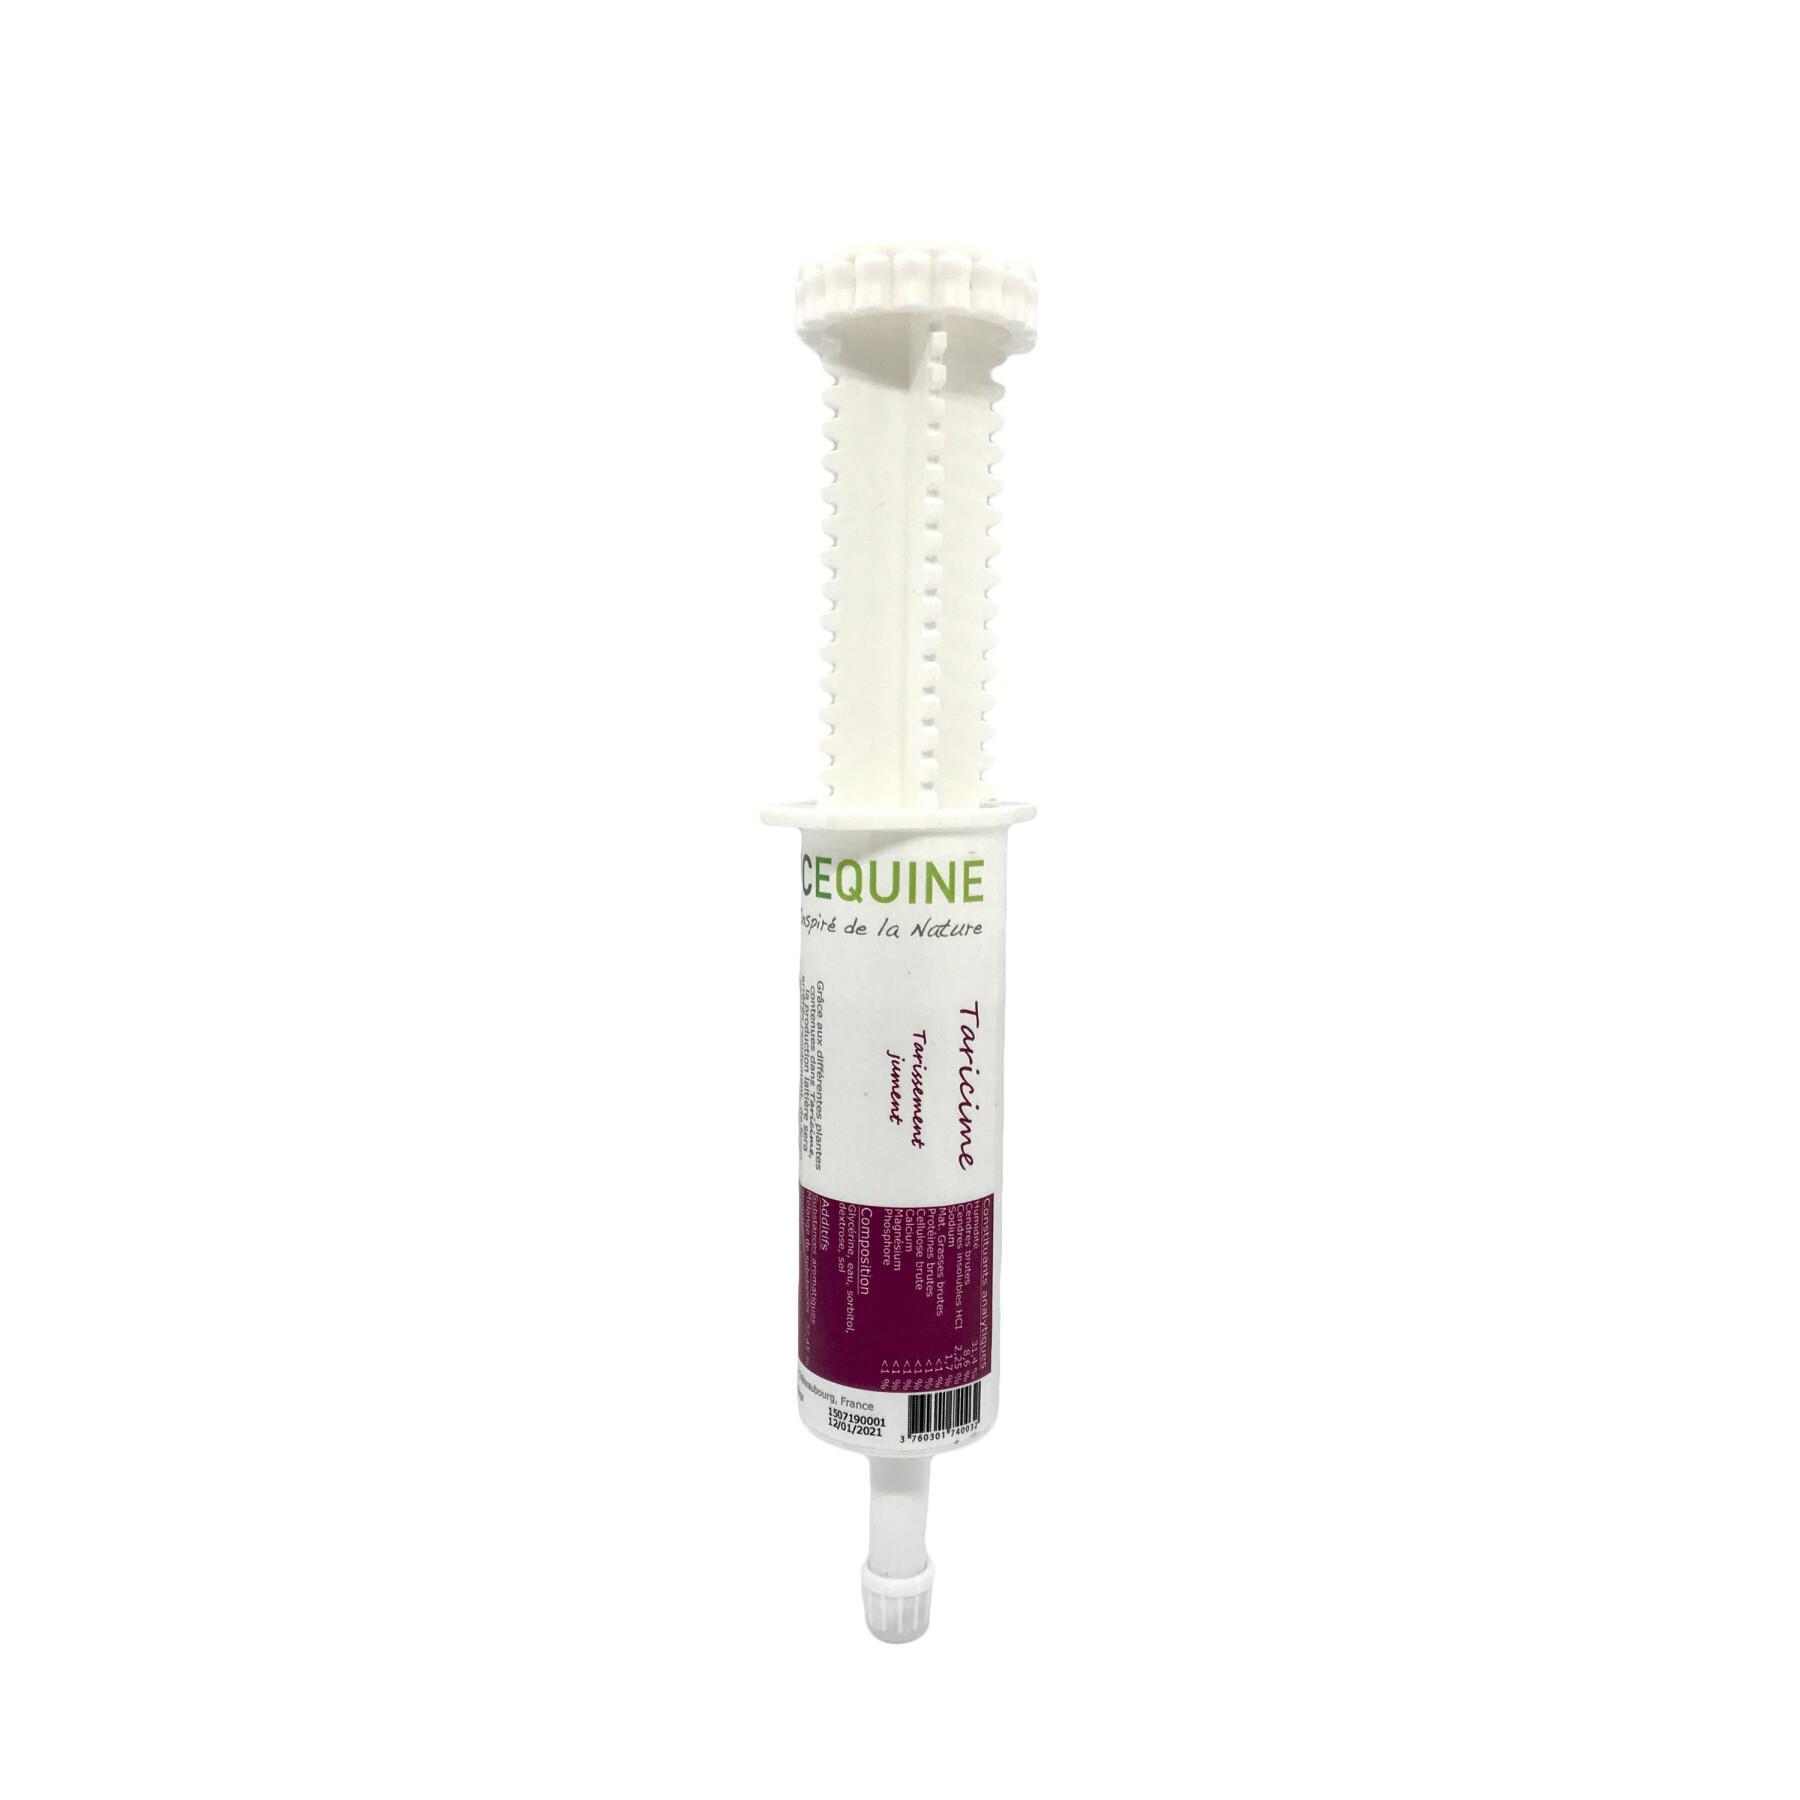 Syringe for mare stop lactation Alliance Equine Taricime